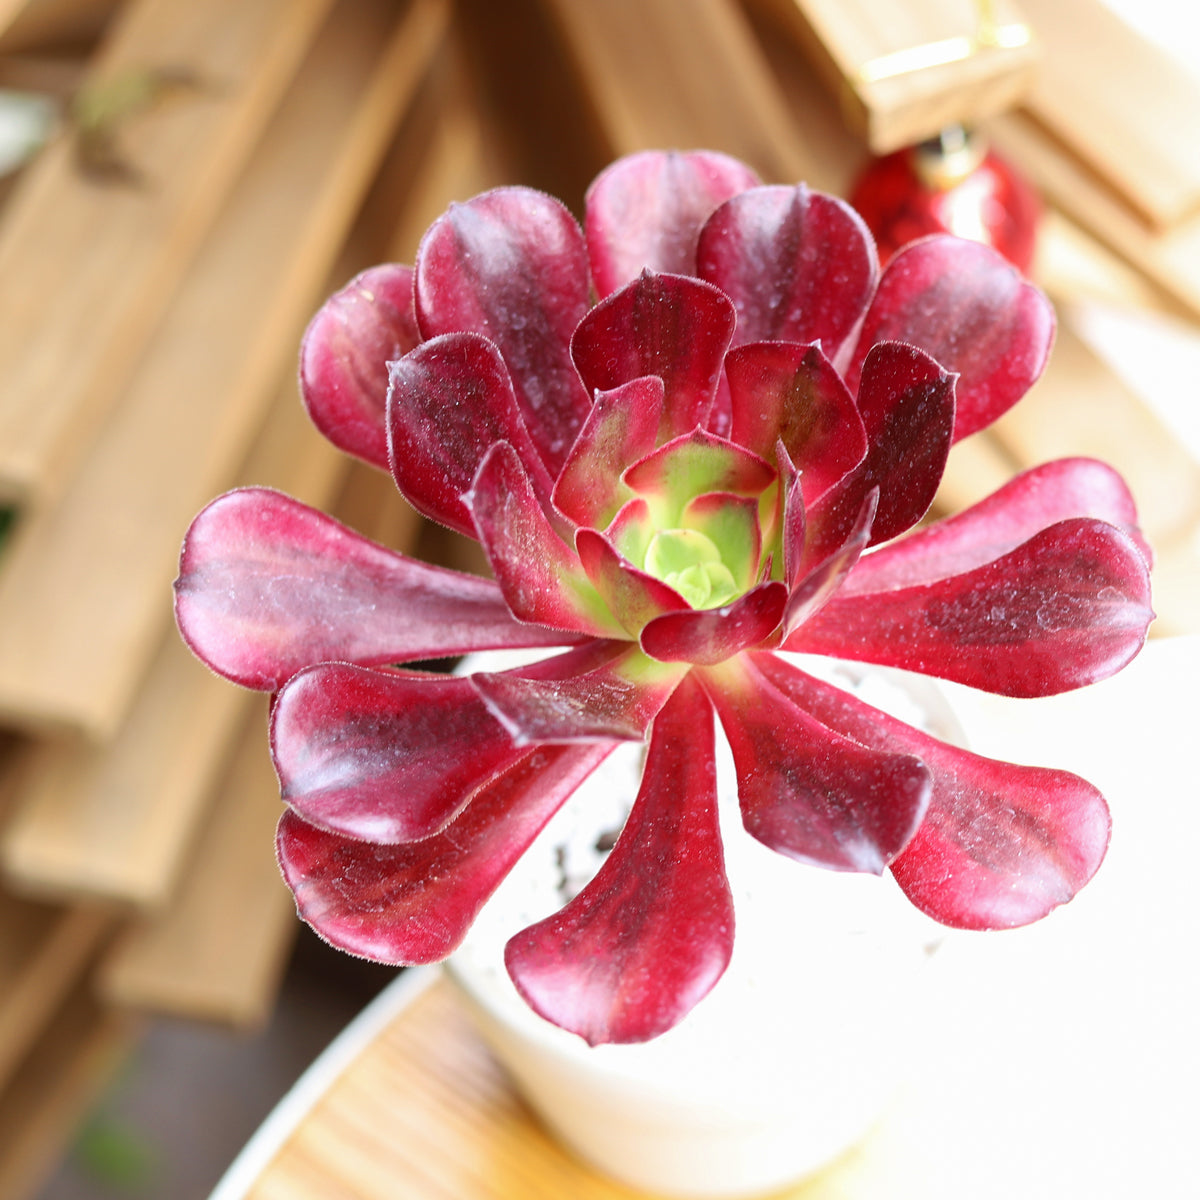 Aeonium Mardi Gras Rosettes Succulent Plant for sale, buy succulent online, Holiday decor ideas, Succulent gifts 